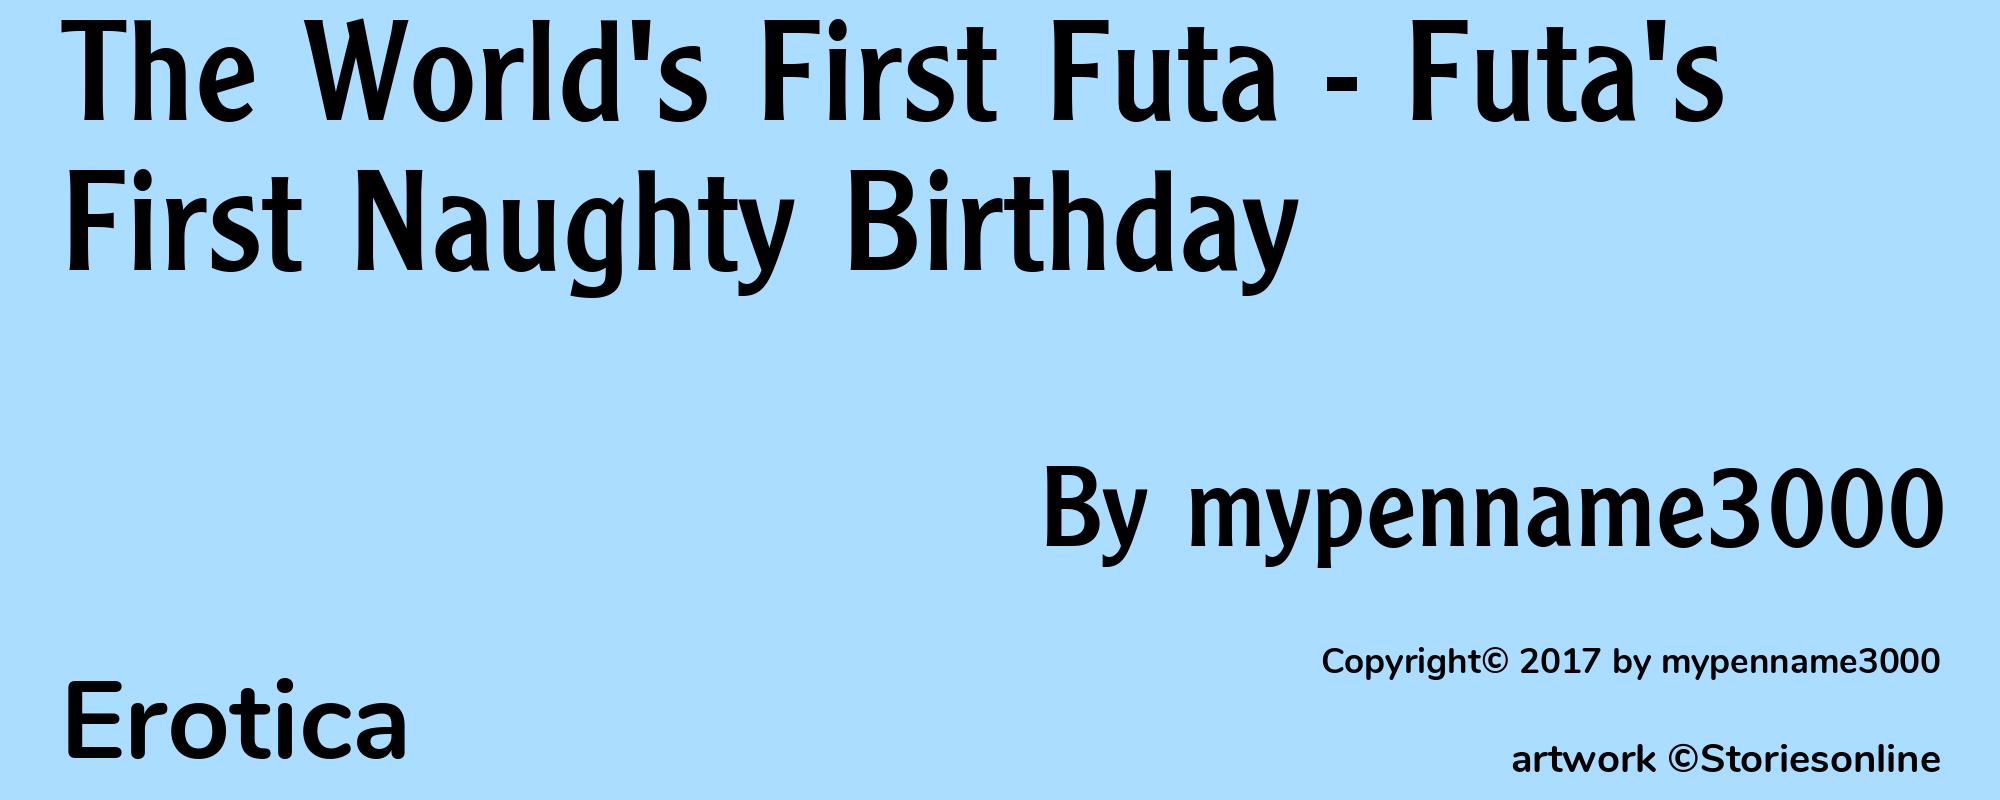 The World's First Futa - Futa's First Naughty Birthday - Cover